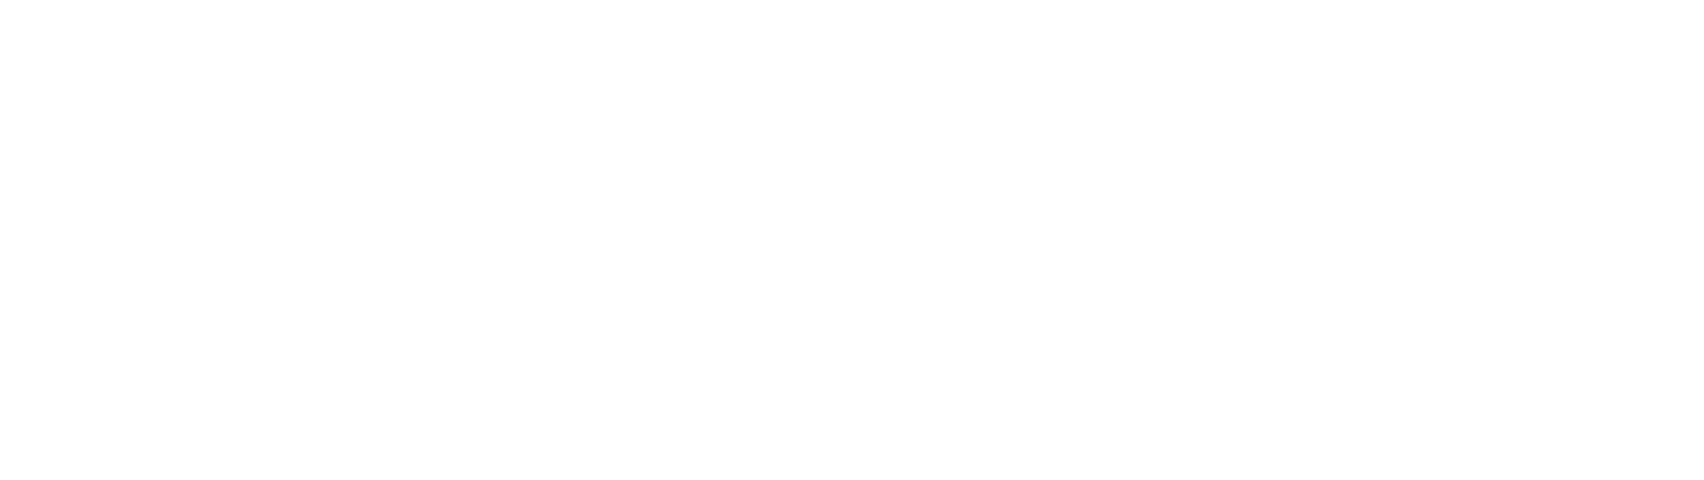 LREO logo